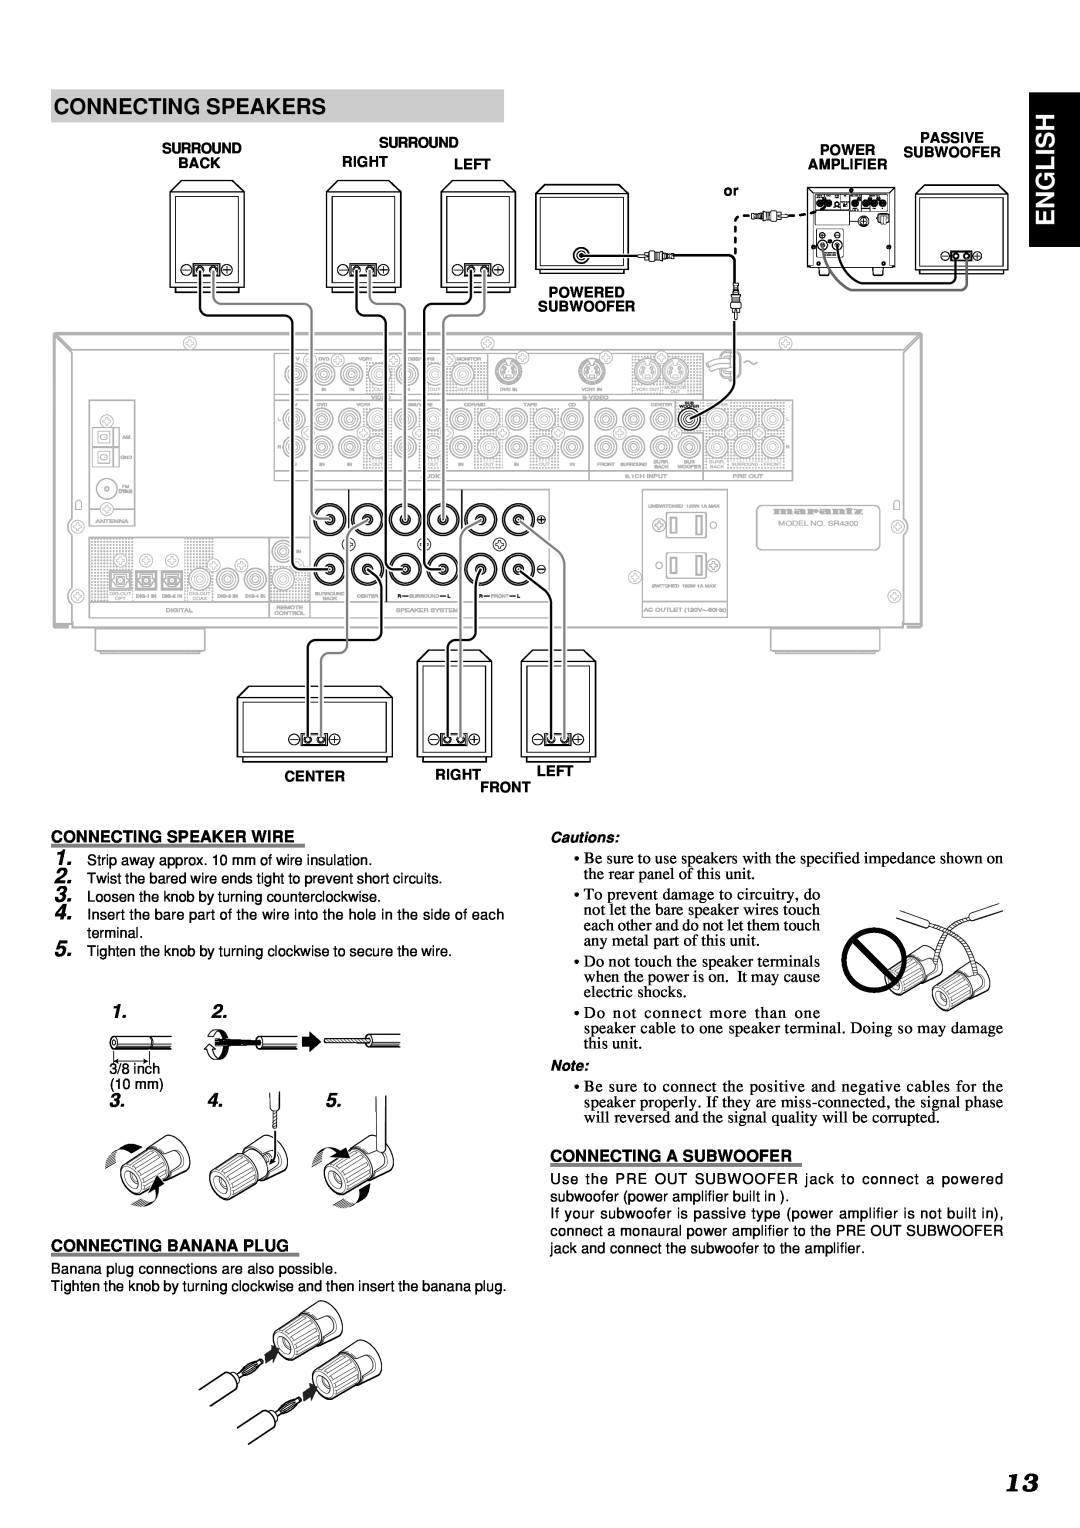 Marantz SR4300 manual English, Connecting Speakers, Connecting Speaker Wire, Connecting Banana Plug, Connecting A Subwoofer 